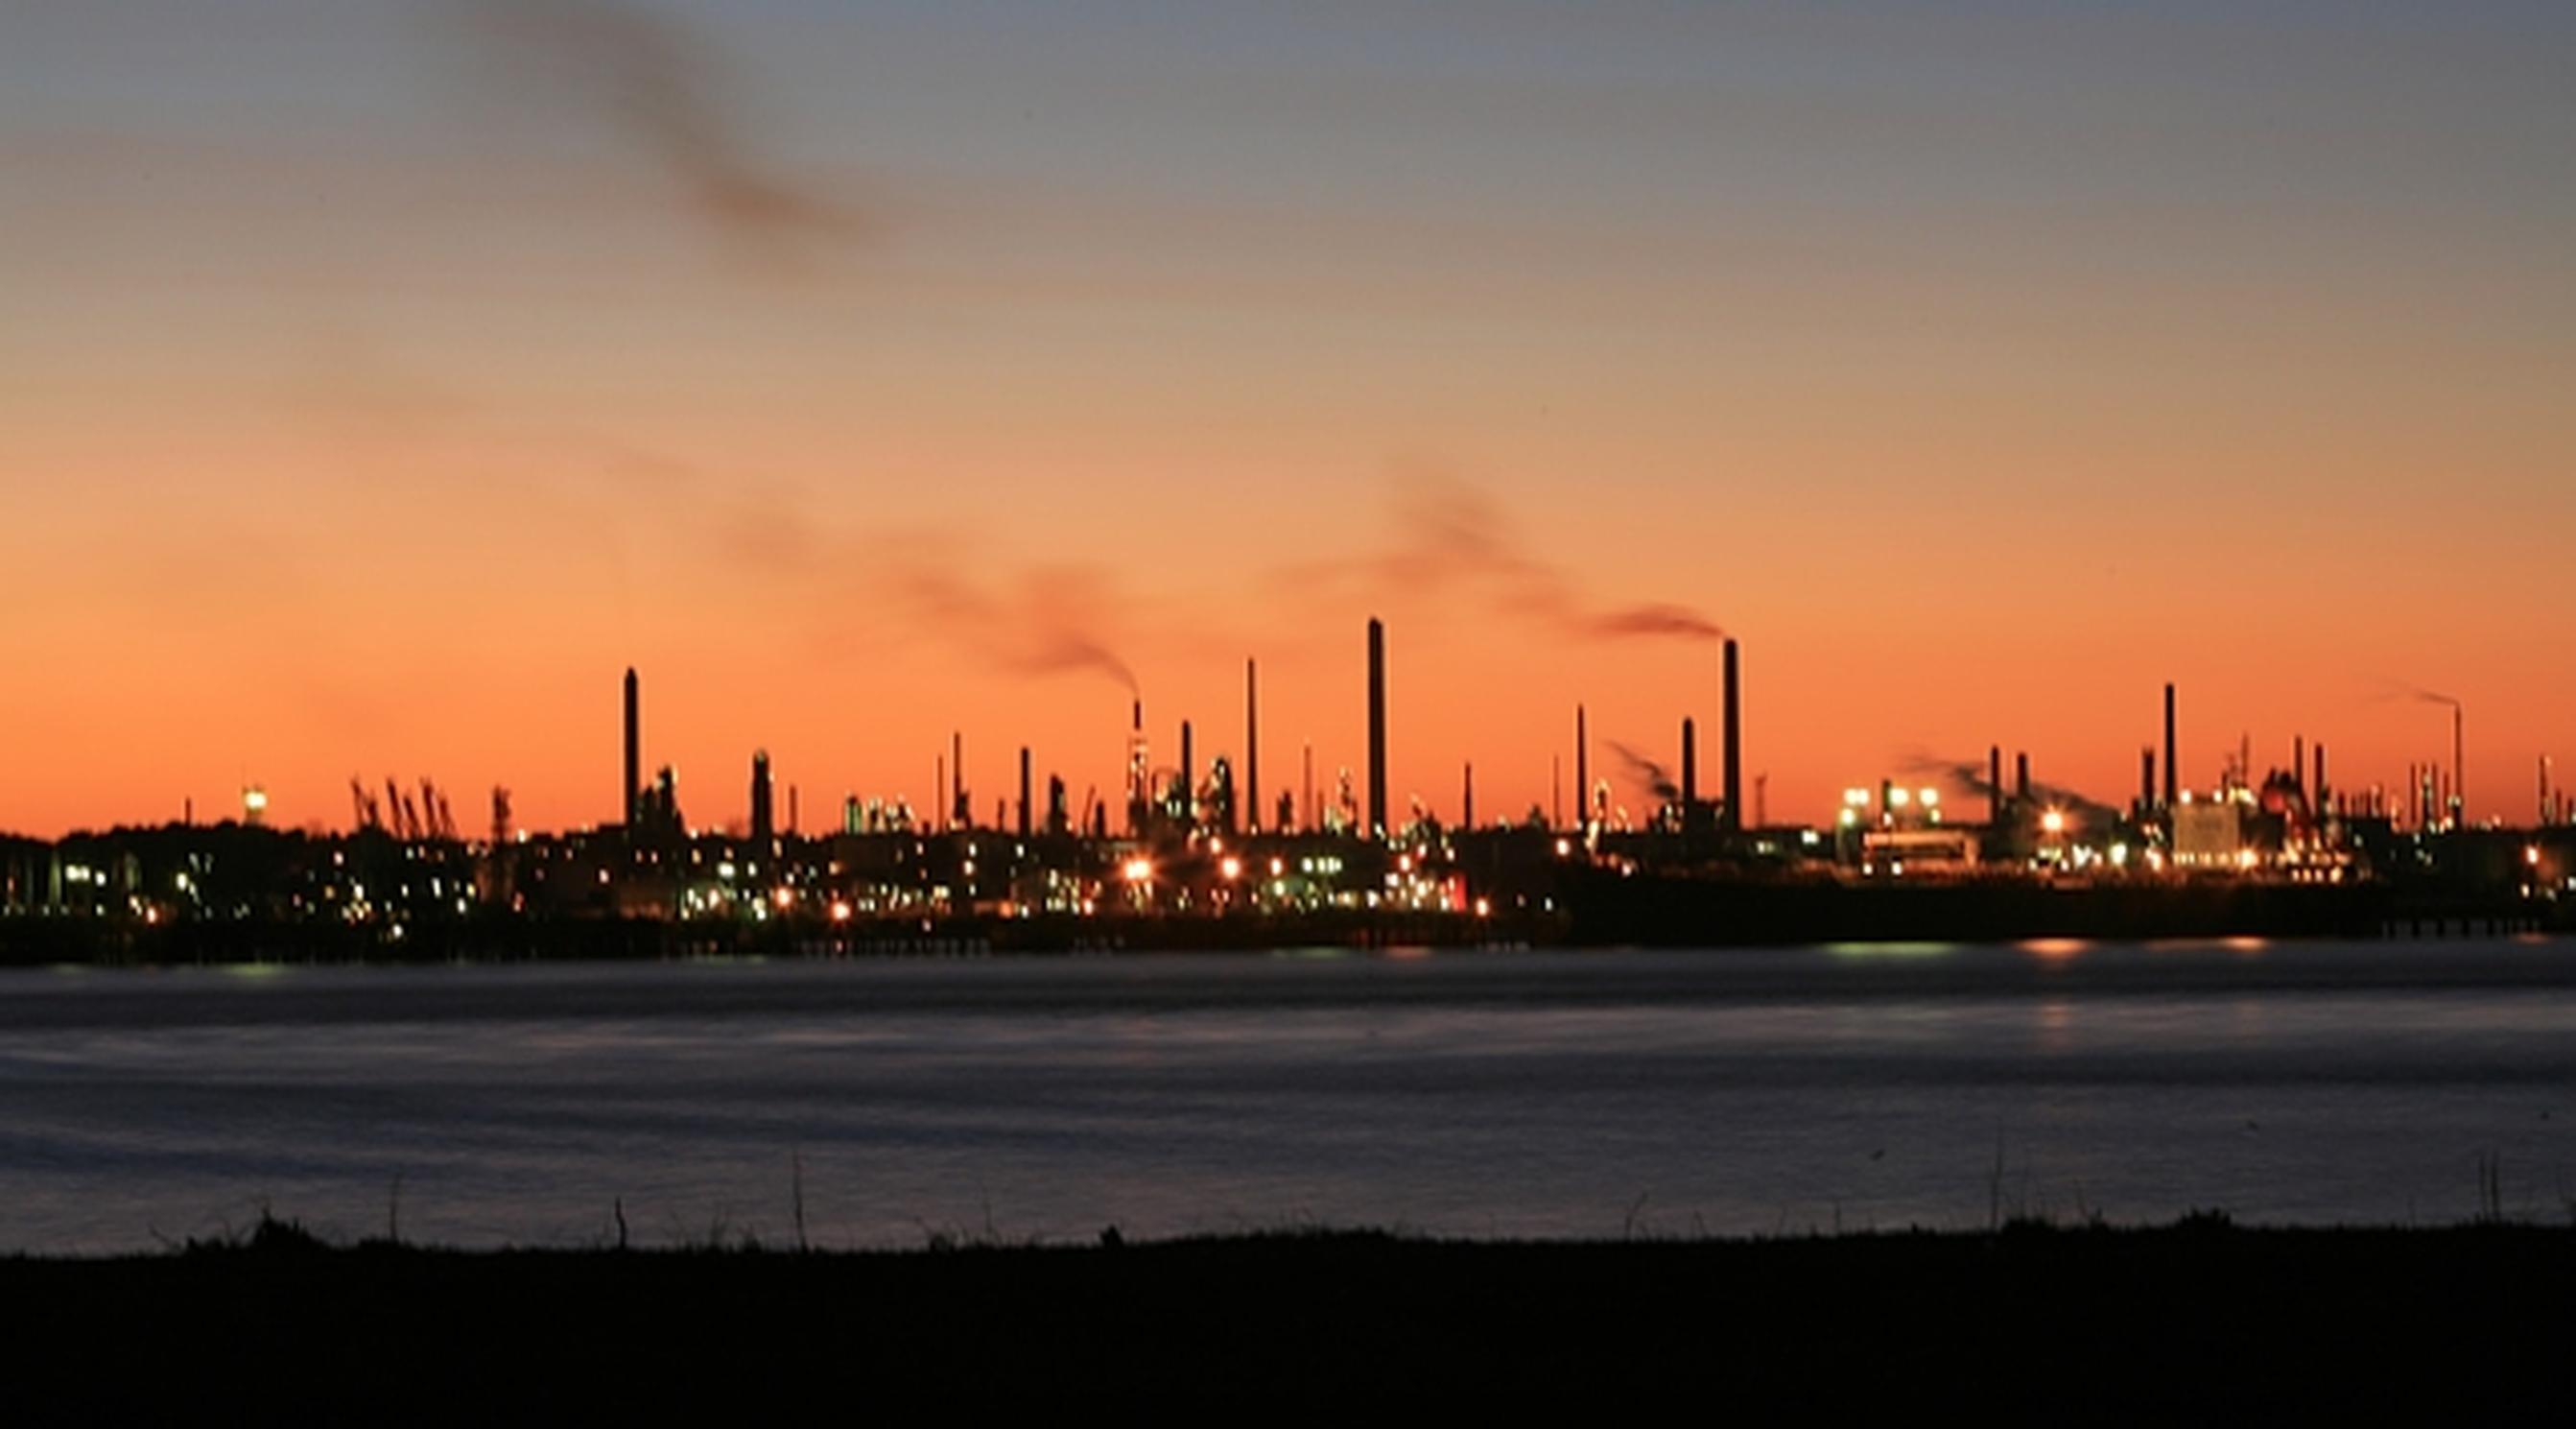 Fawley oil refinery